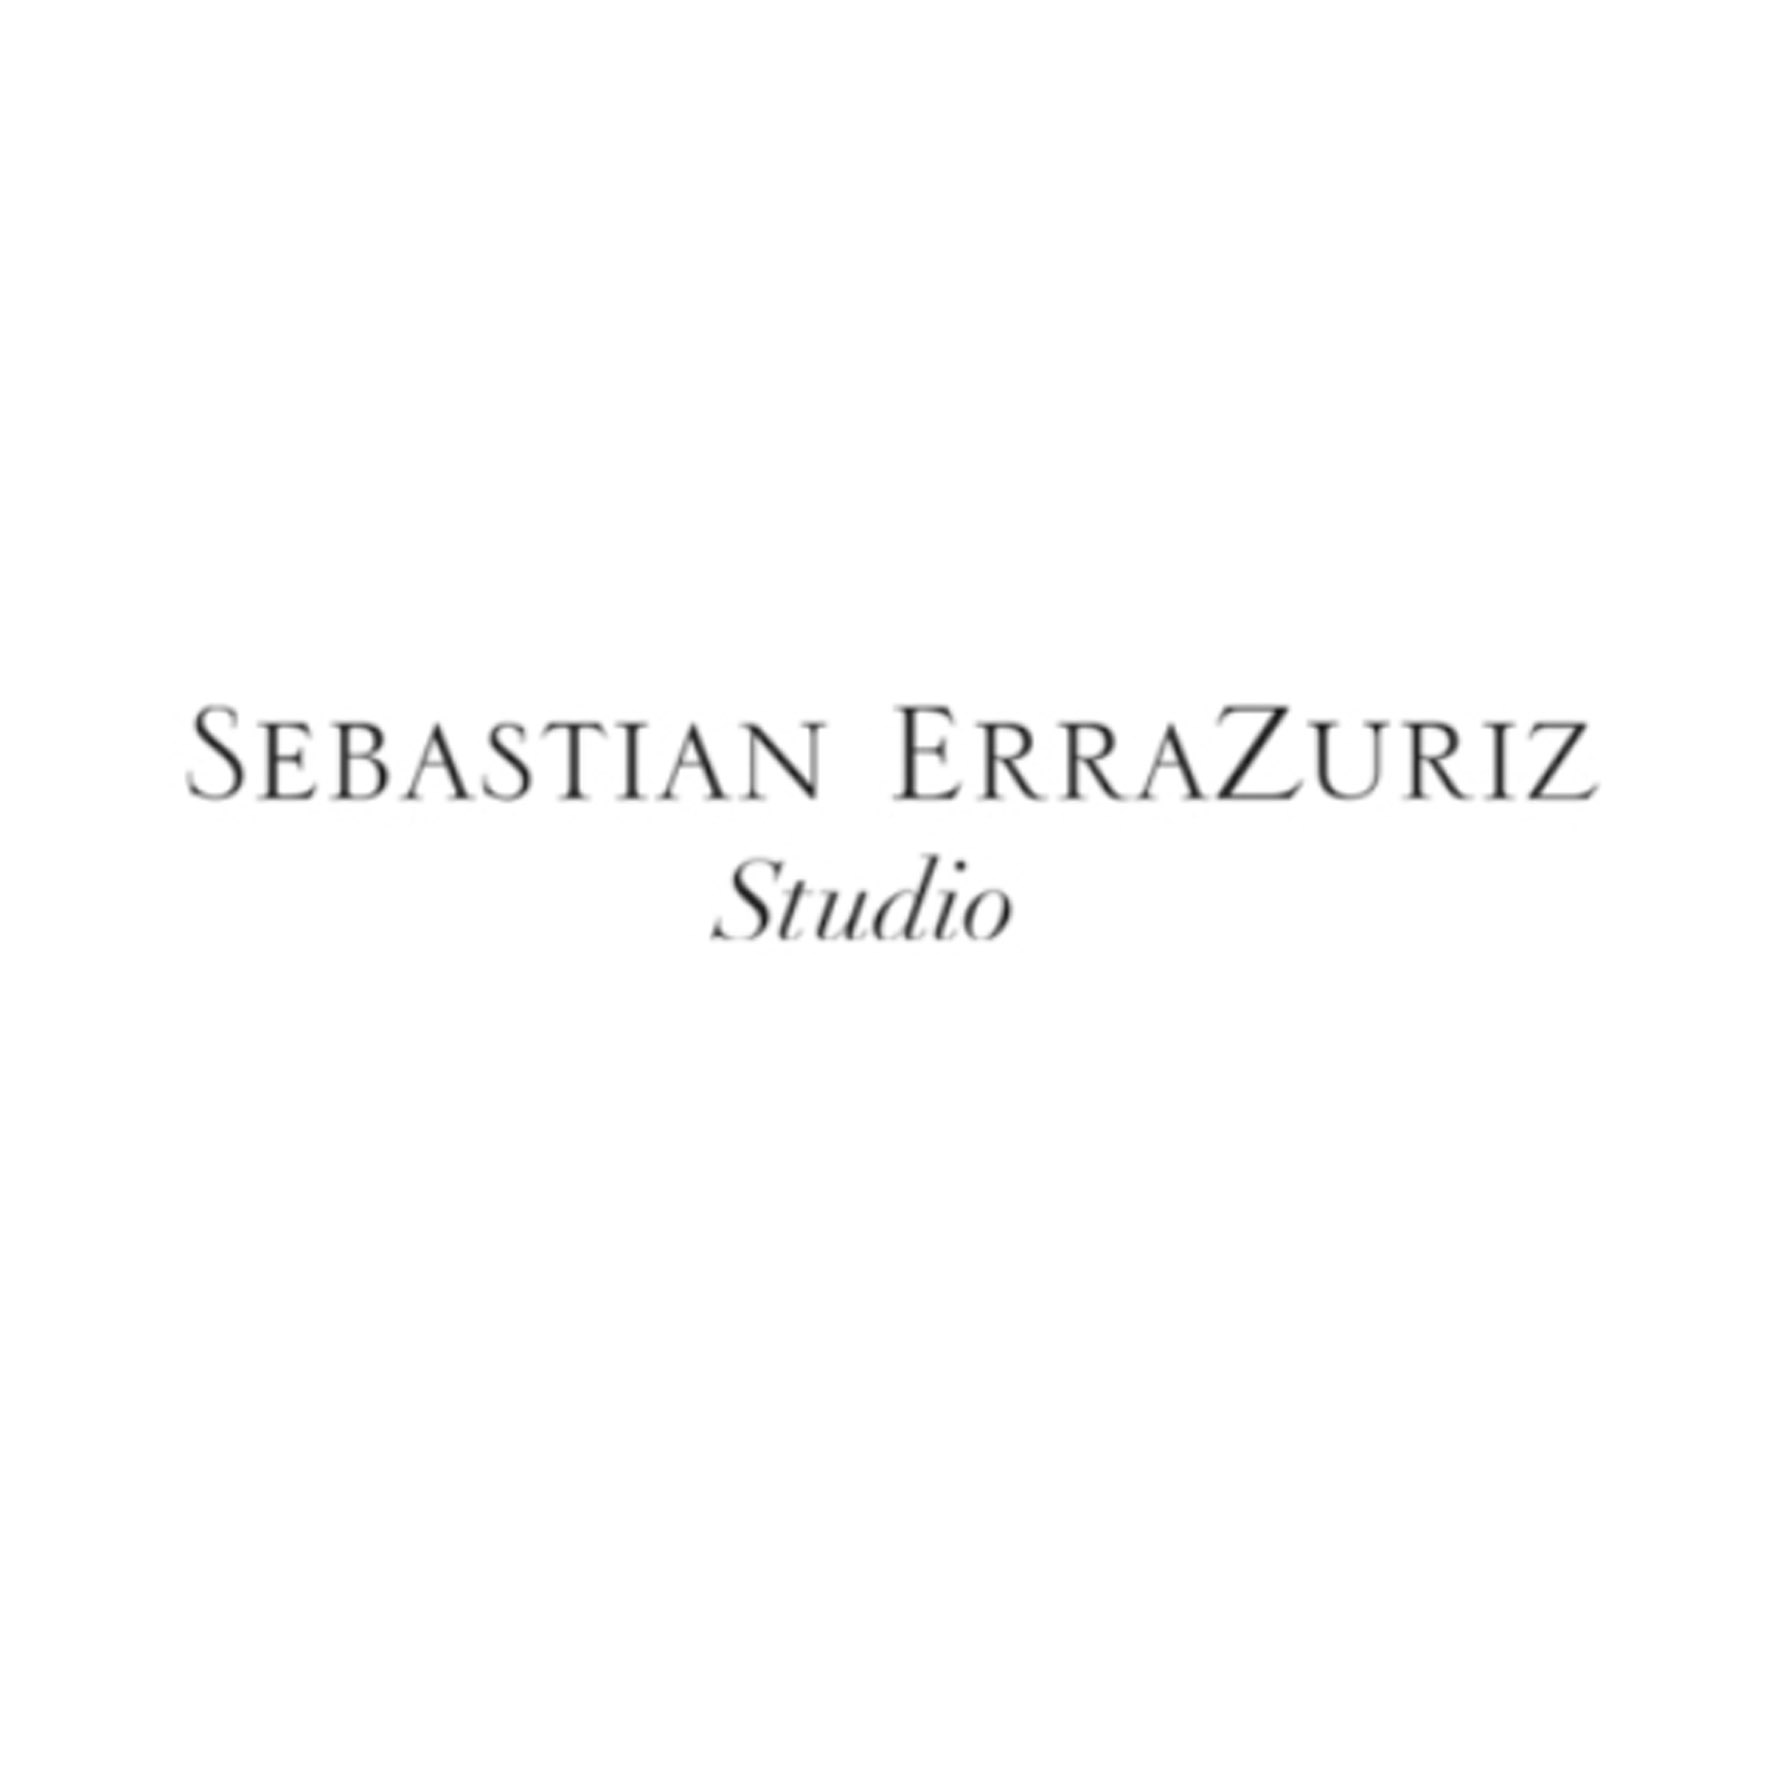 Sebastian Errazuriz Office